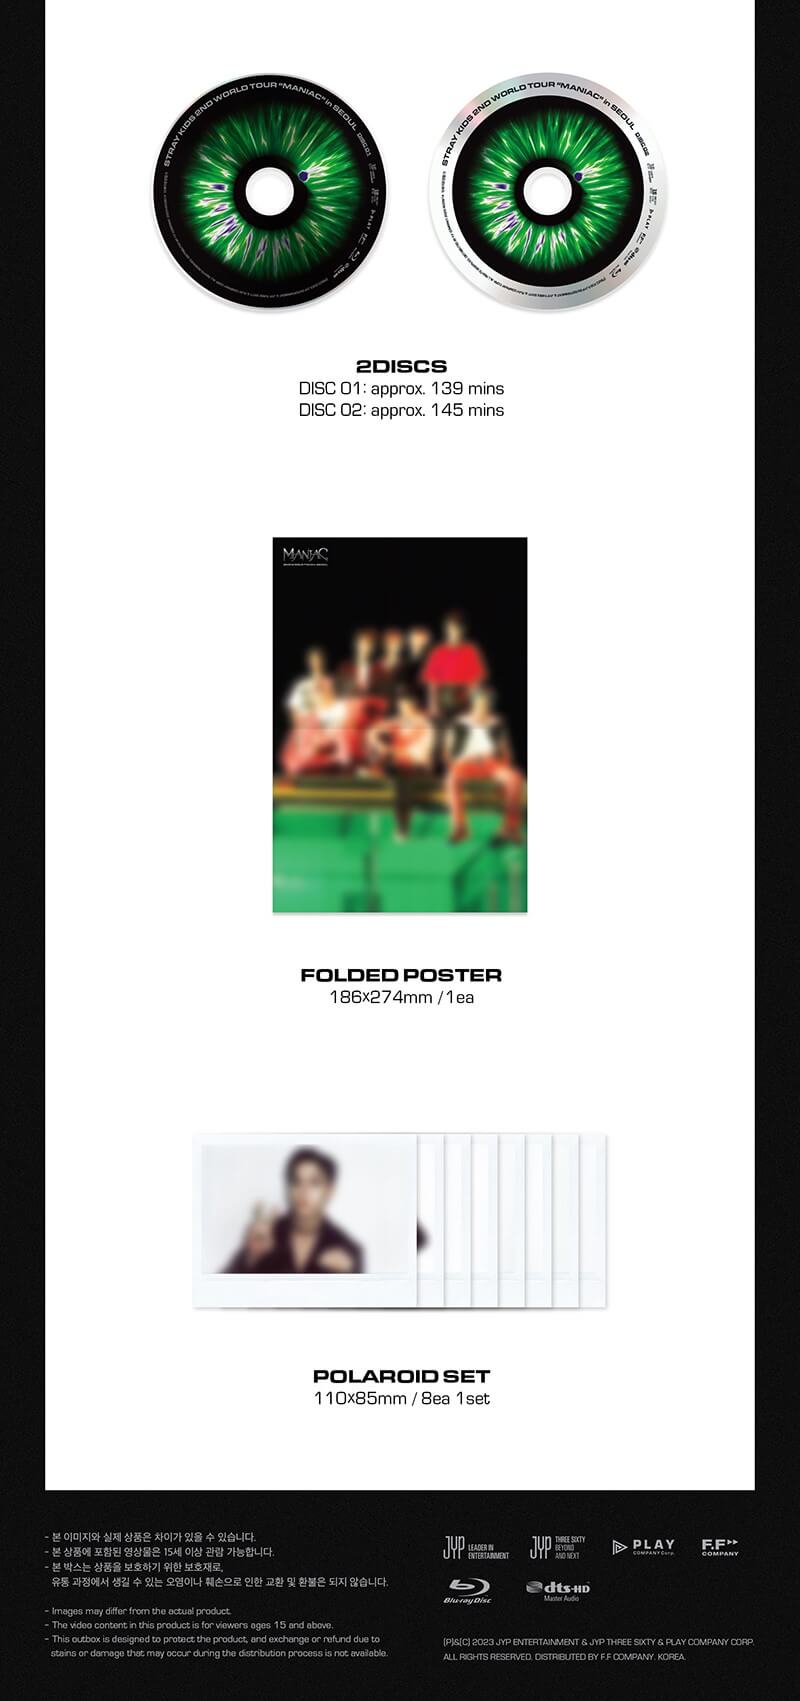 Stray Kids 2nd World Tour MANIAC in SEOUL Blu-ray Inclusions 2Discs Folded Poster Polaroid Set 